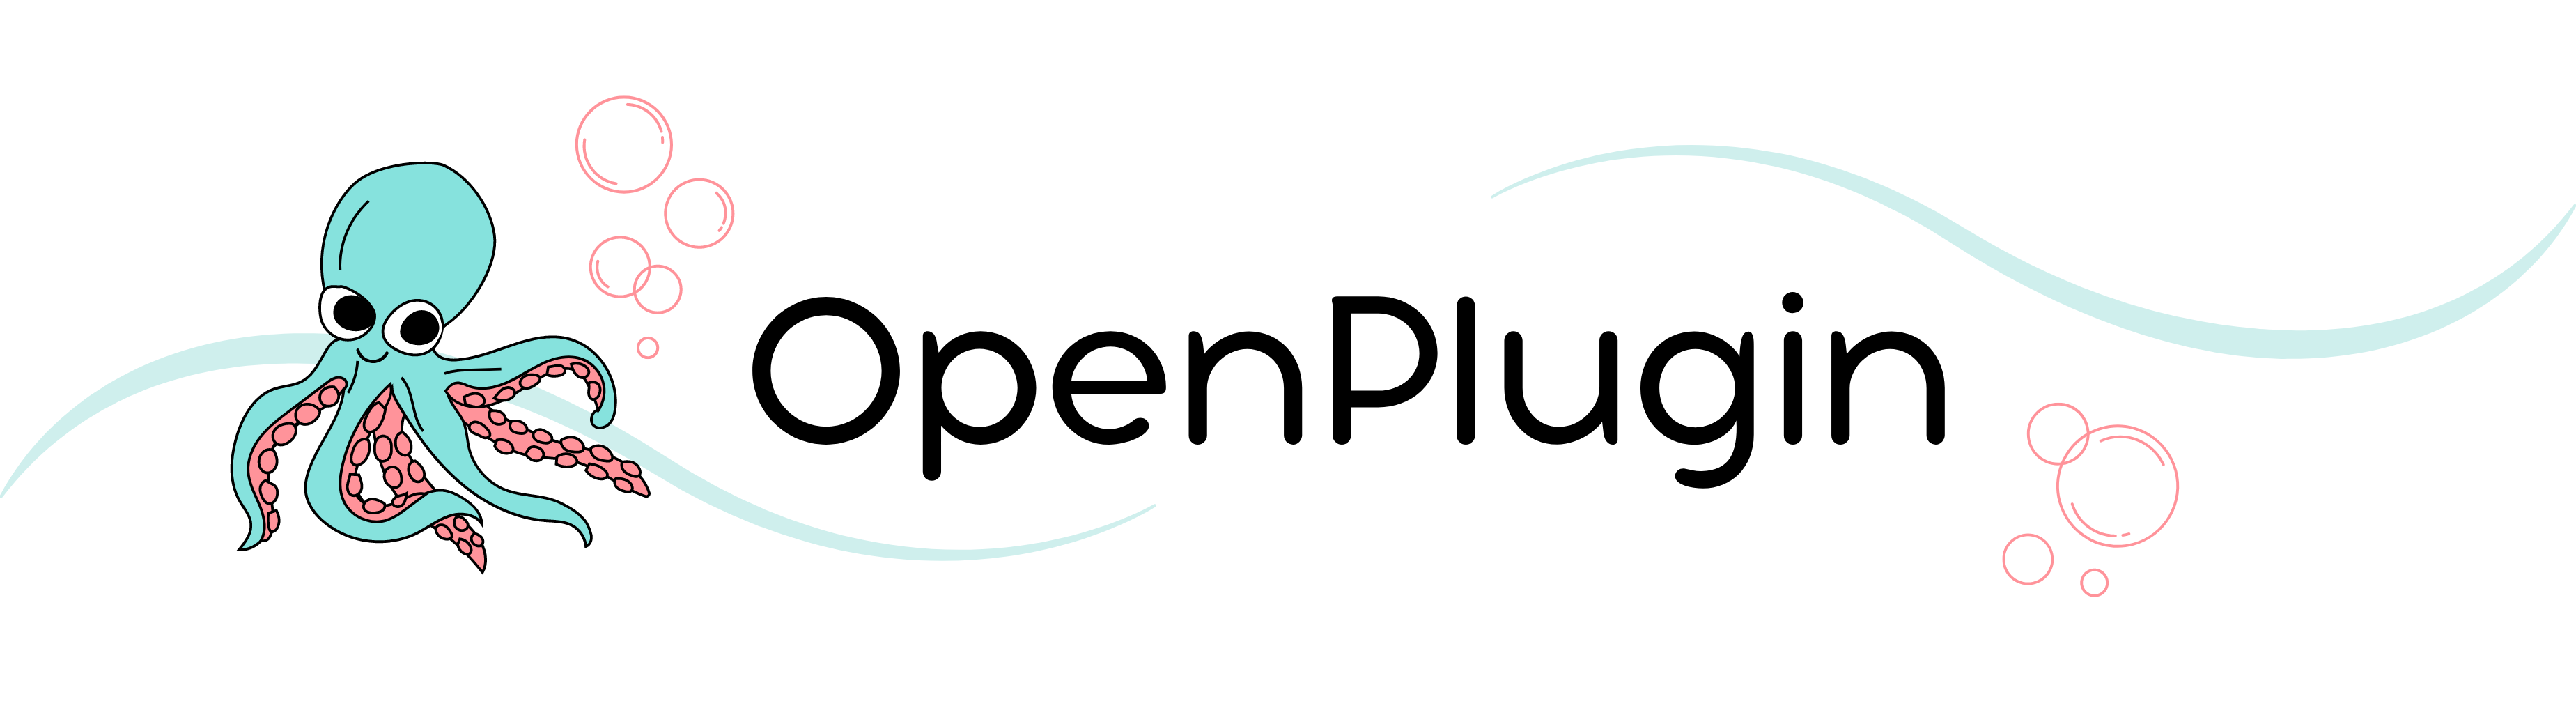 Openplugin banner image